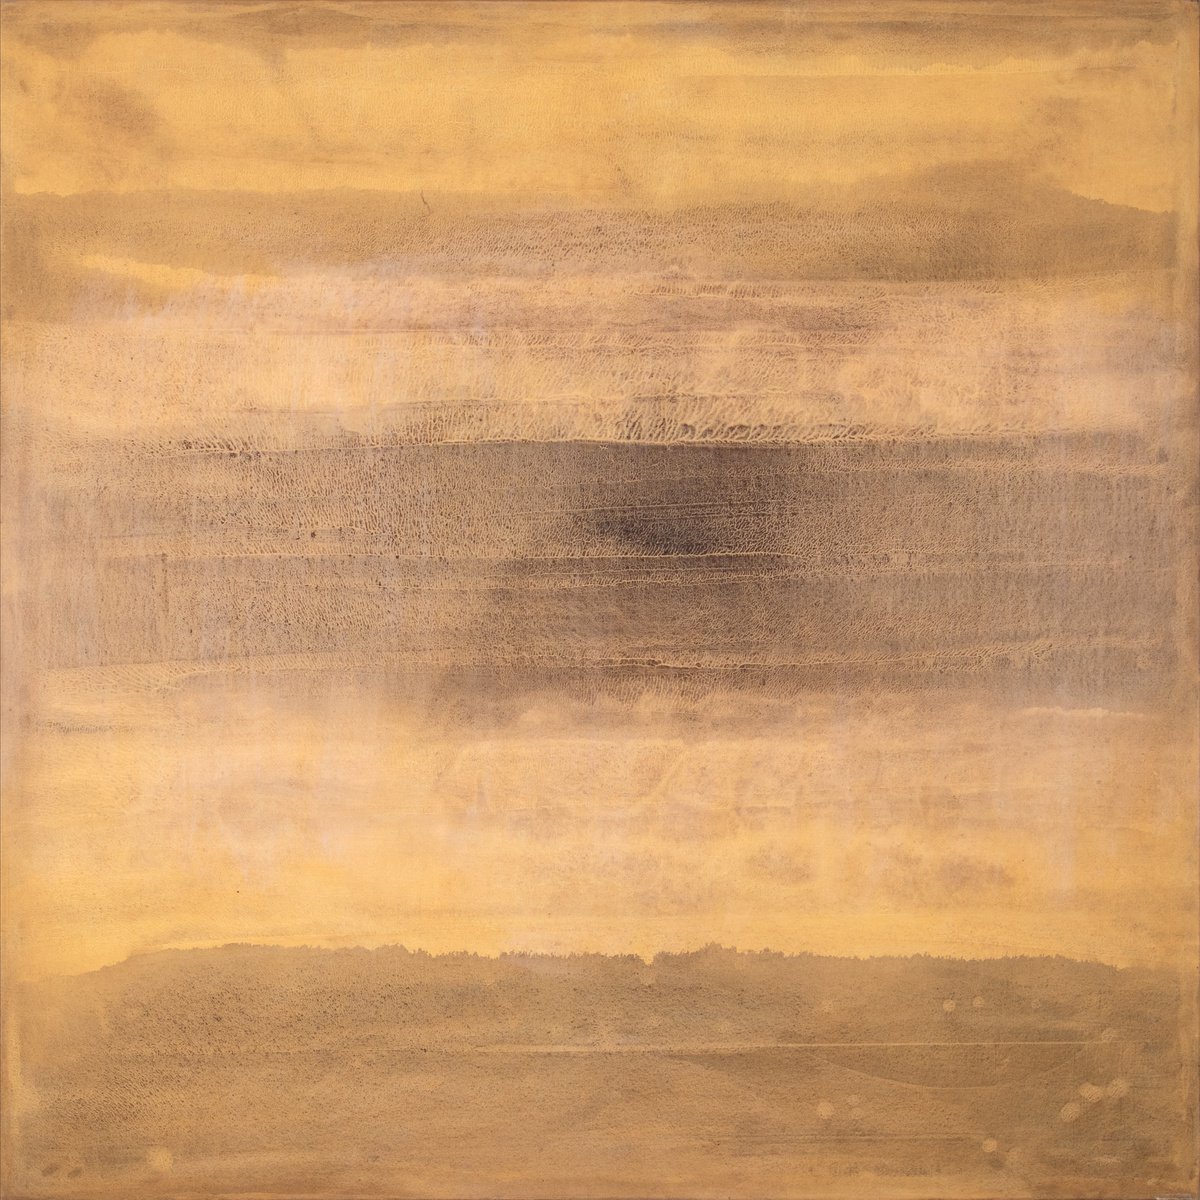 No. 22-19 (140 x 140 cm ) by Rokas Berziunas